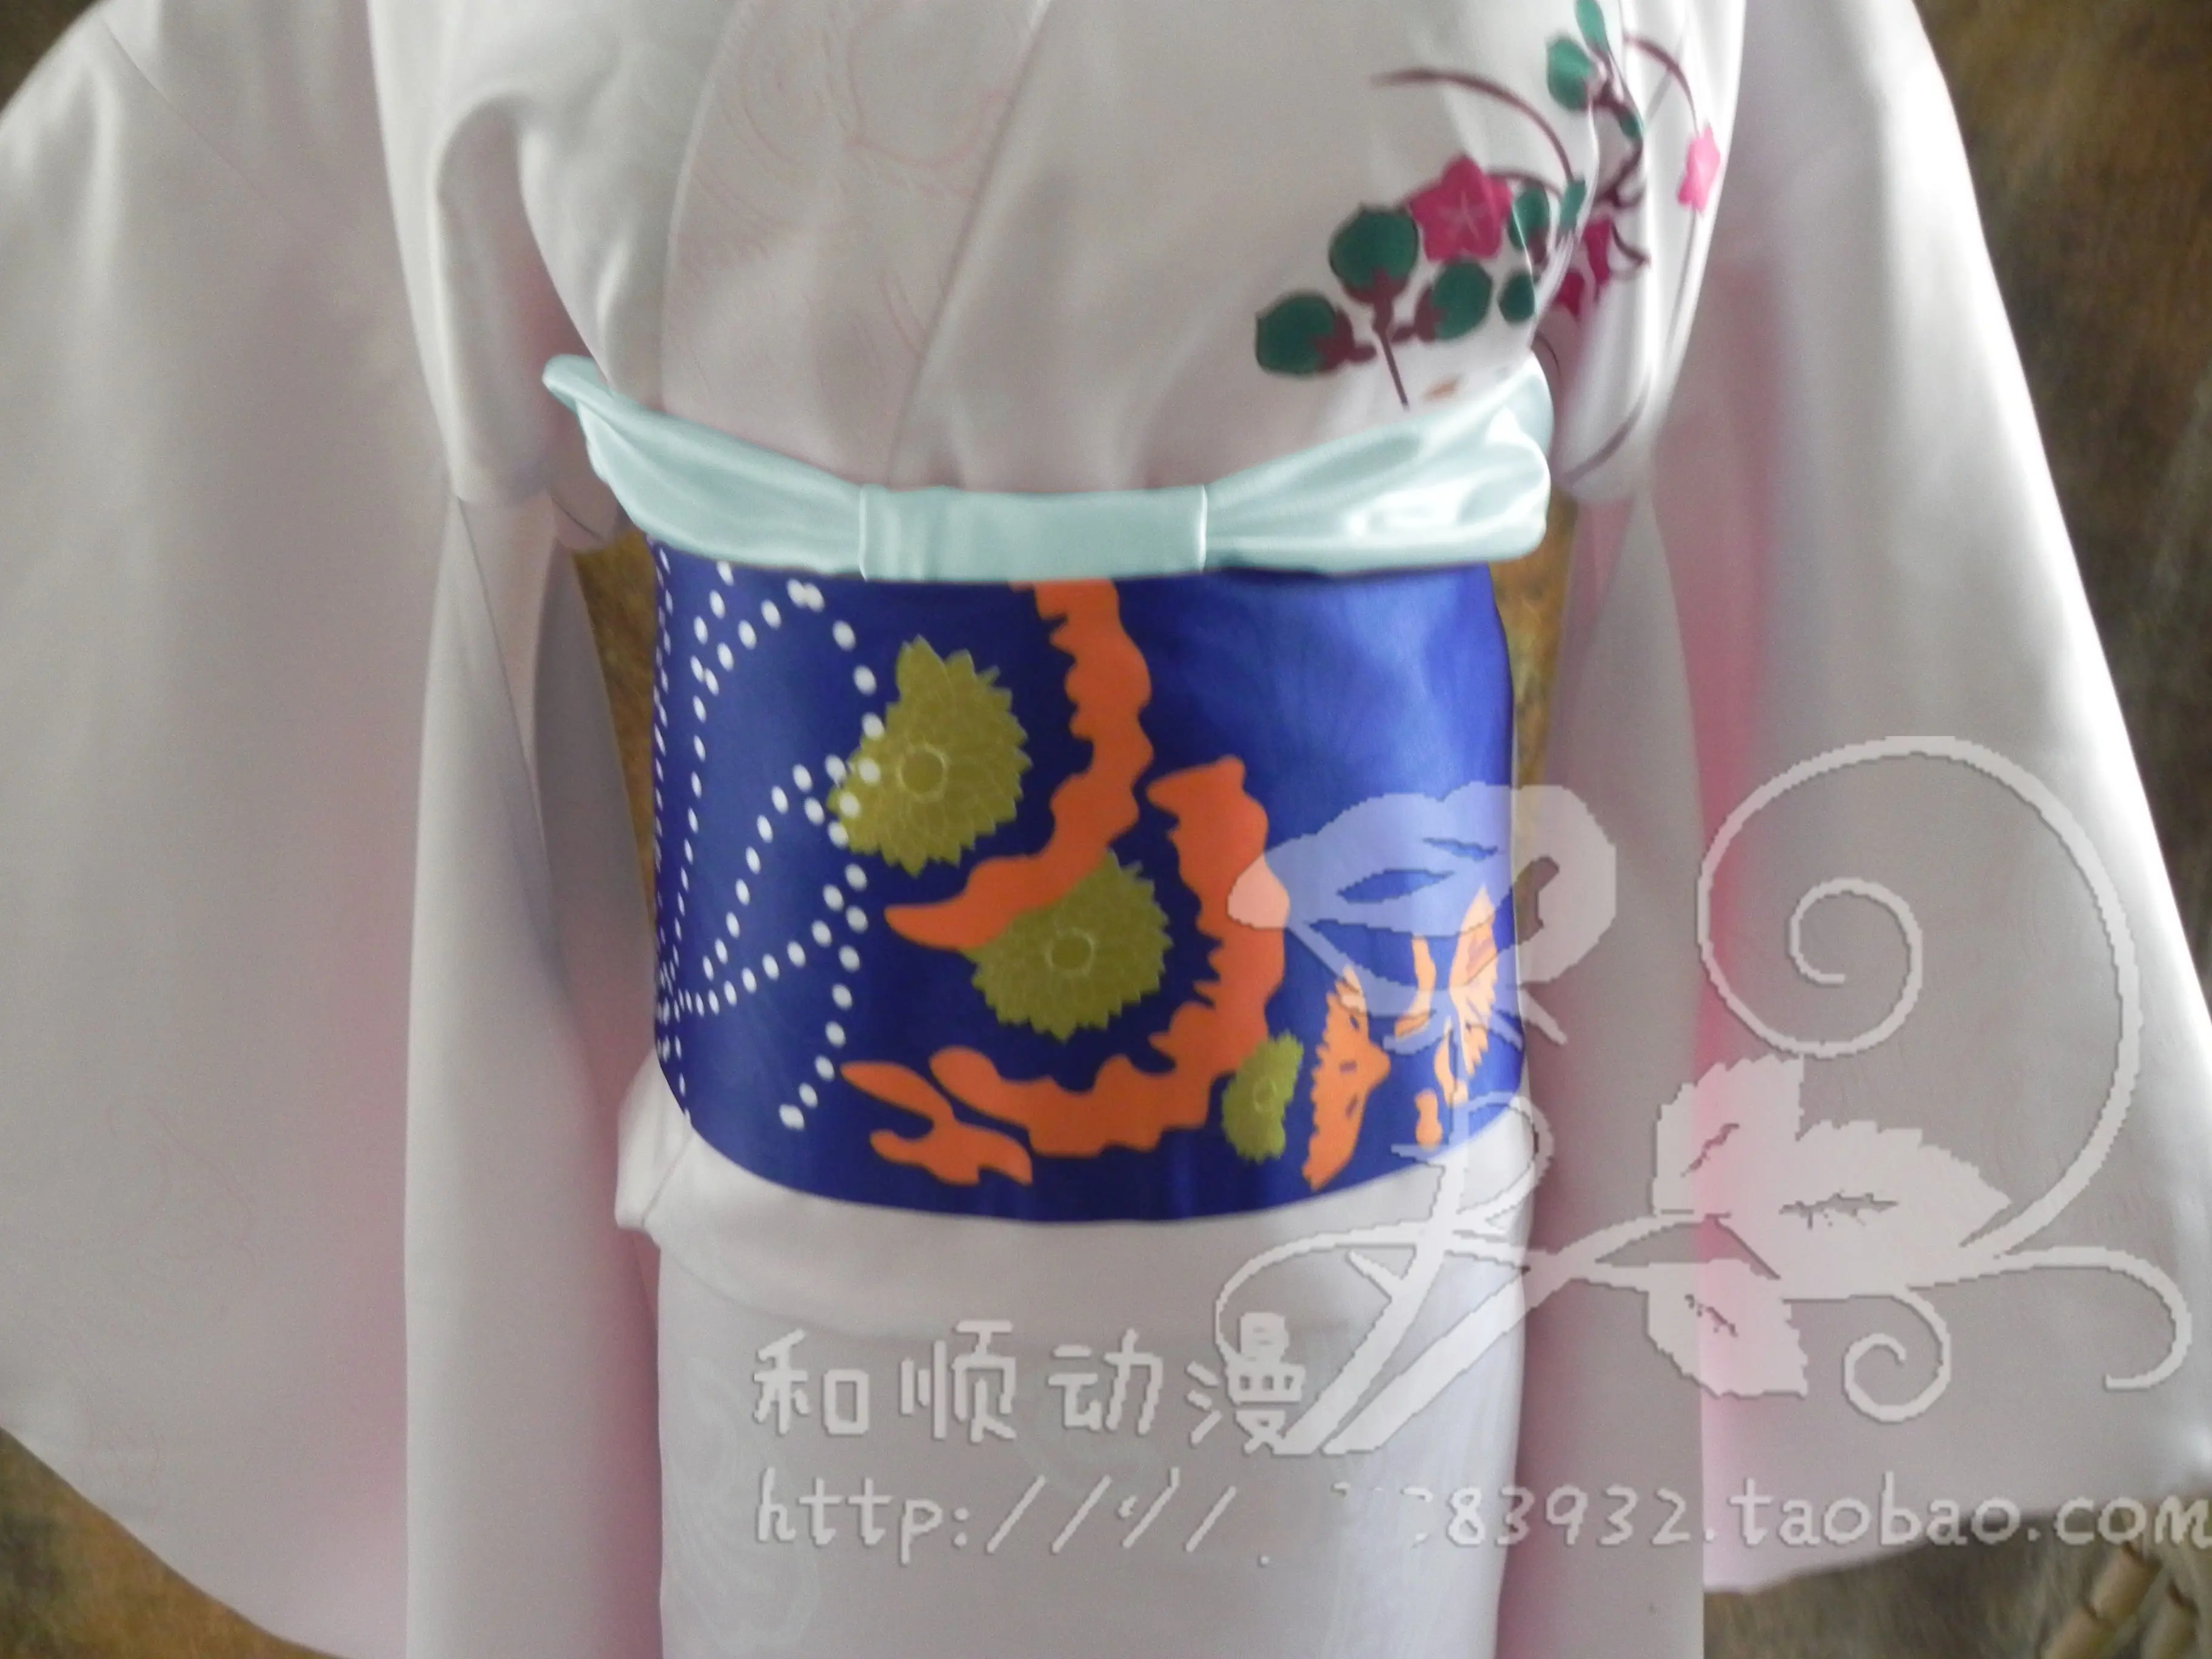 

Anime FGO Fate Grand Order Kara no Kyoukai Ryougi Shiki Flower Kimono Yukata Dress Uniform Cosplay Costumes Full Set